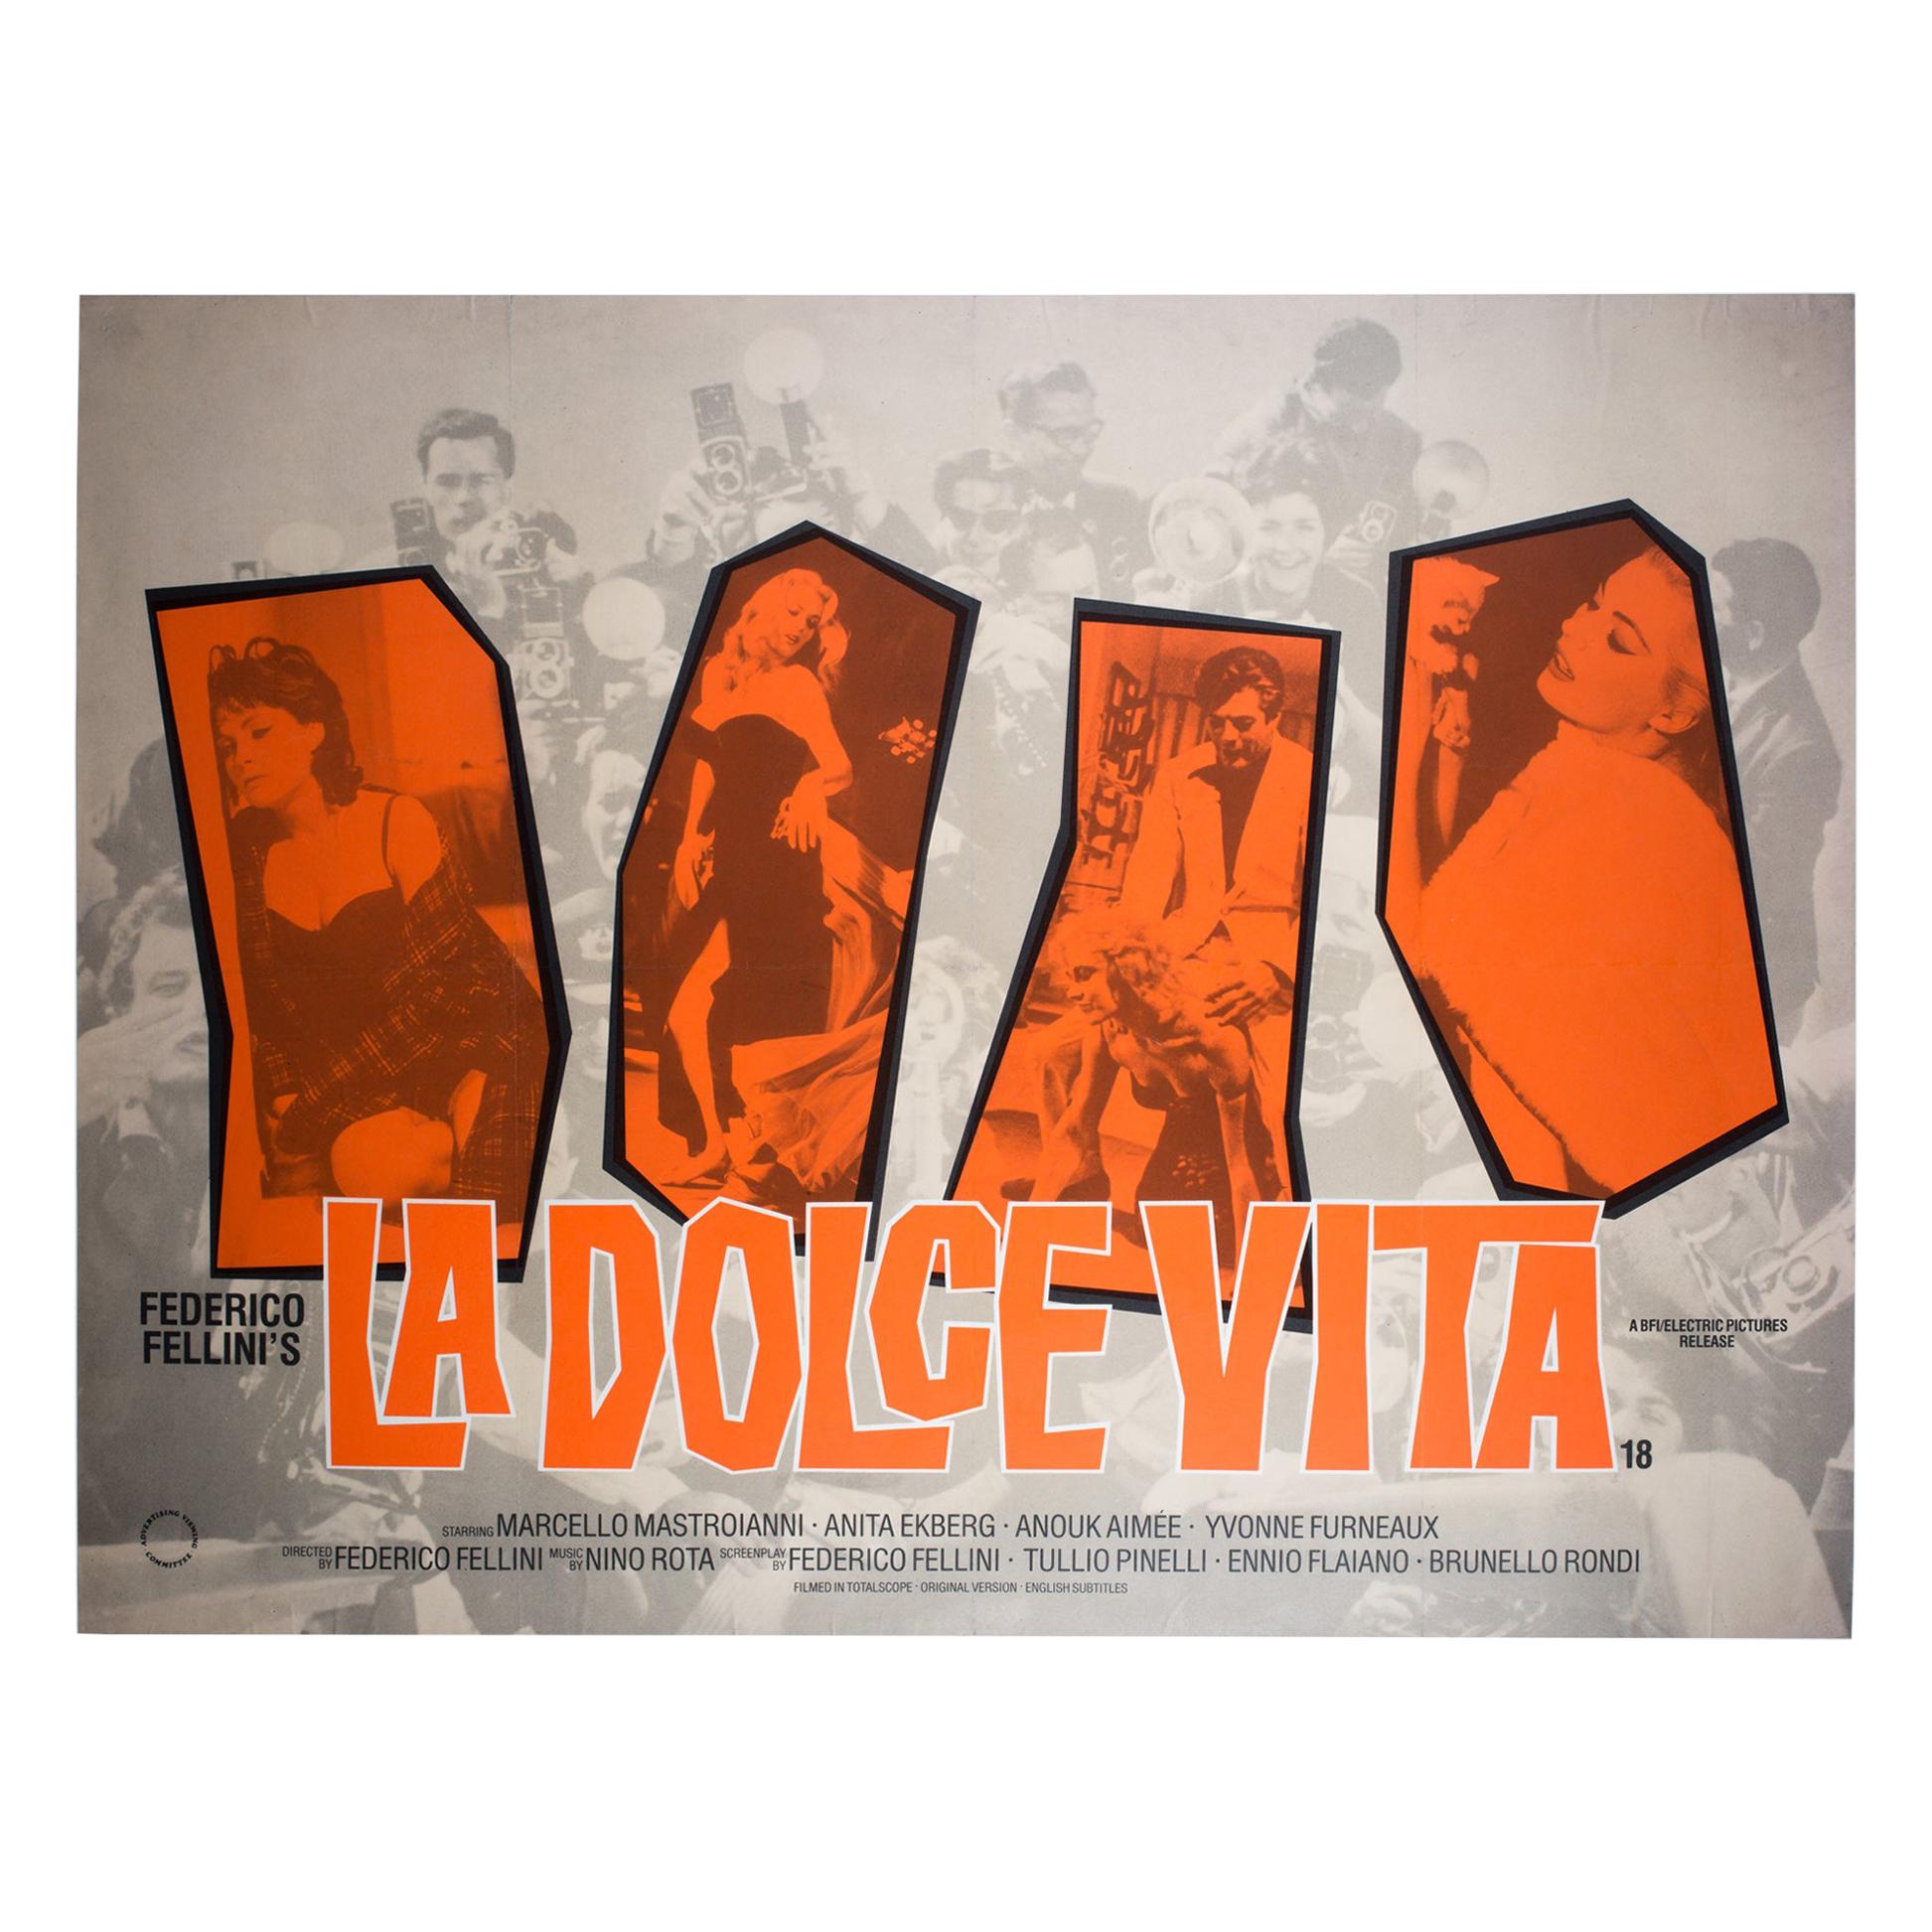 La Dolce Vita R1987 UK BFI Quad Film Poster